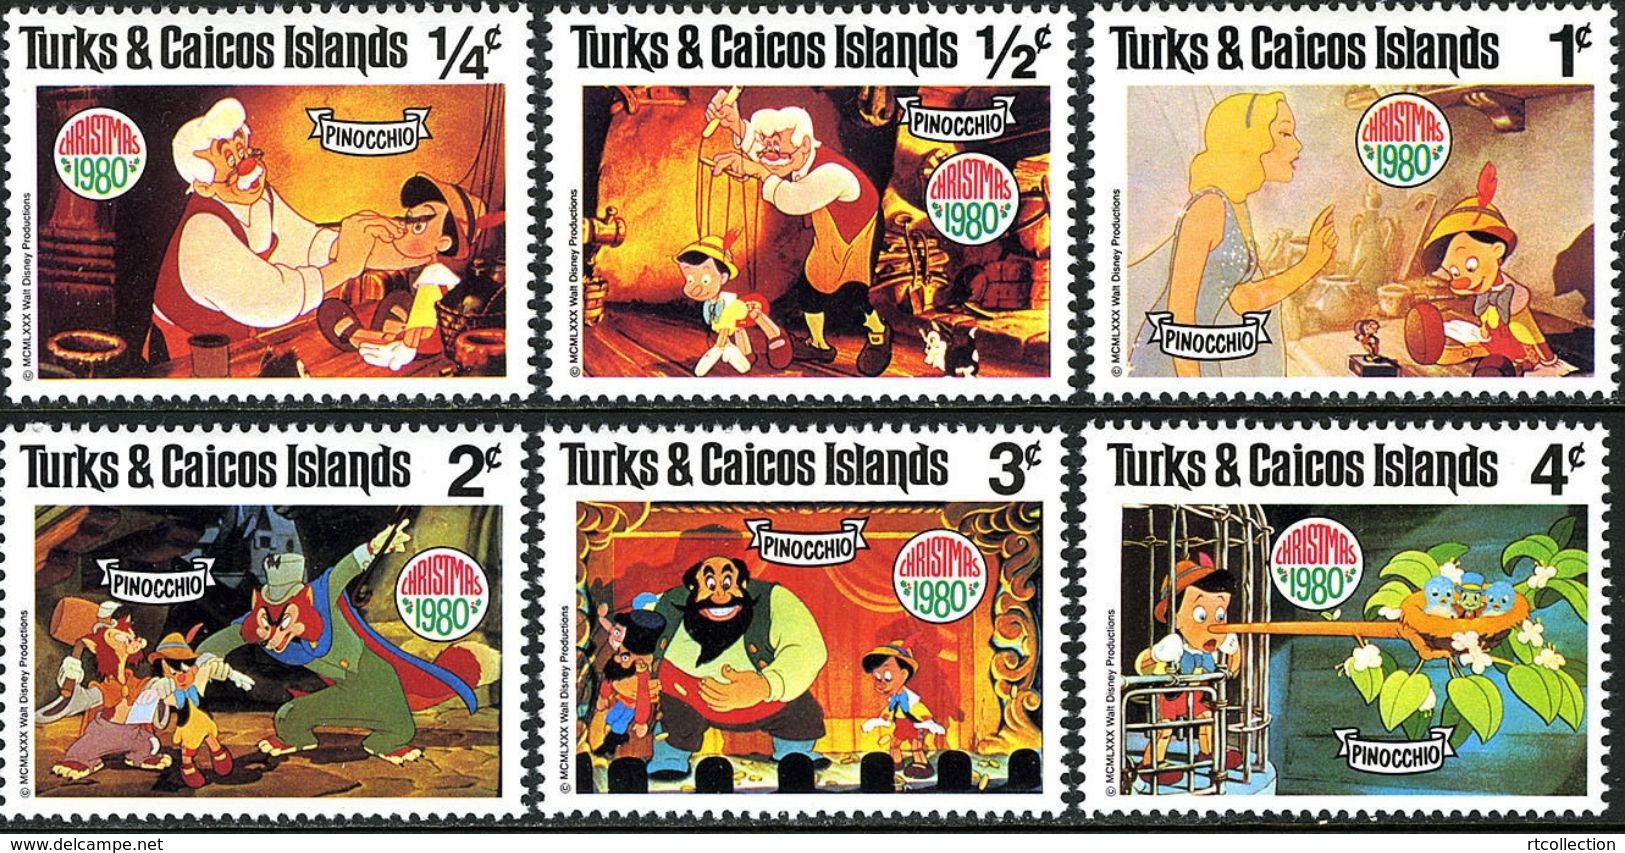 Turks & Caicos Islands 1980 Disney Film Pinocchio Childhood Cartoon Animation Art Cinema Movie Stamps (6) MNH SC#442-450 - Disney